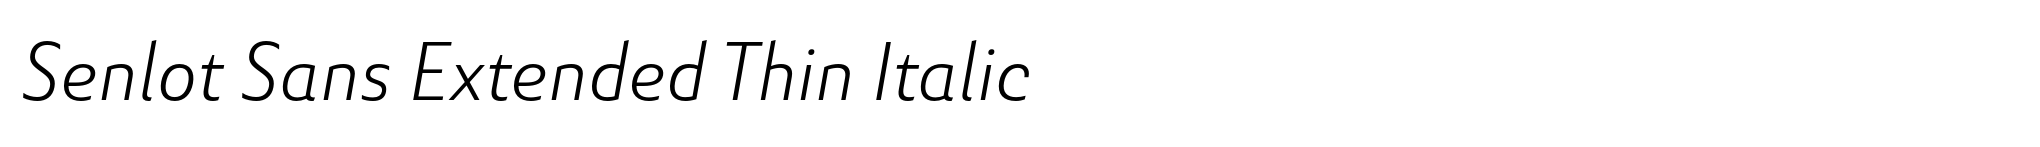 Senlot Sans Extended Thin Italic image